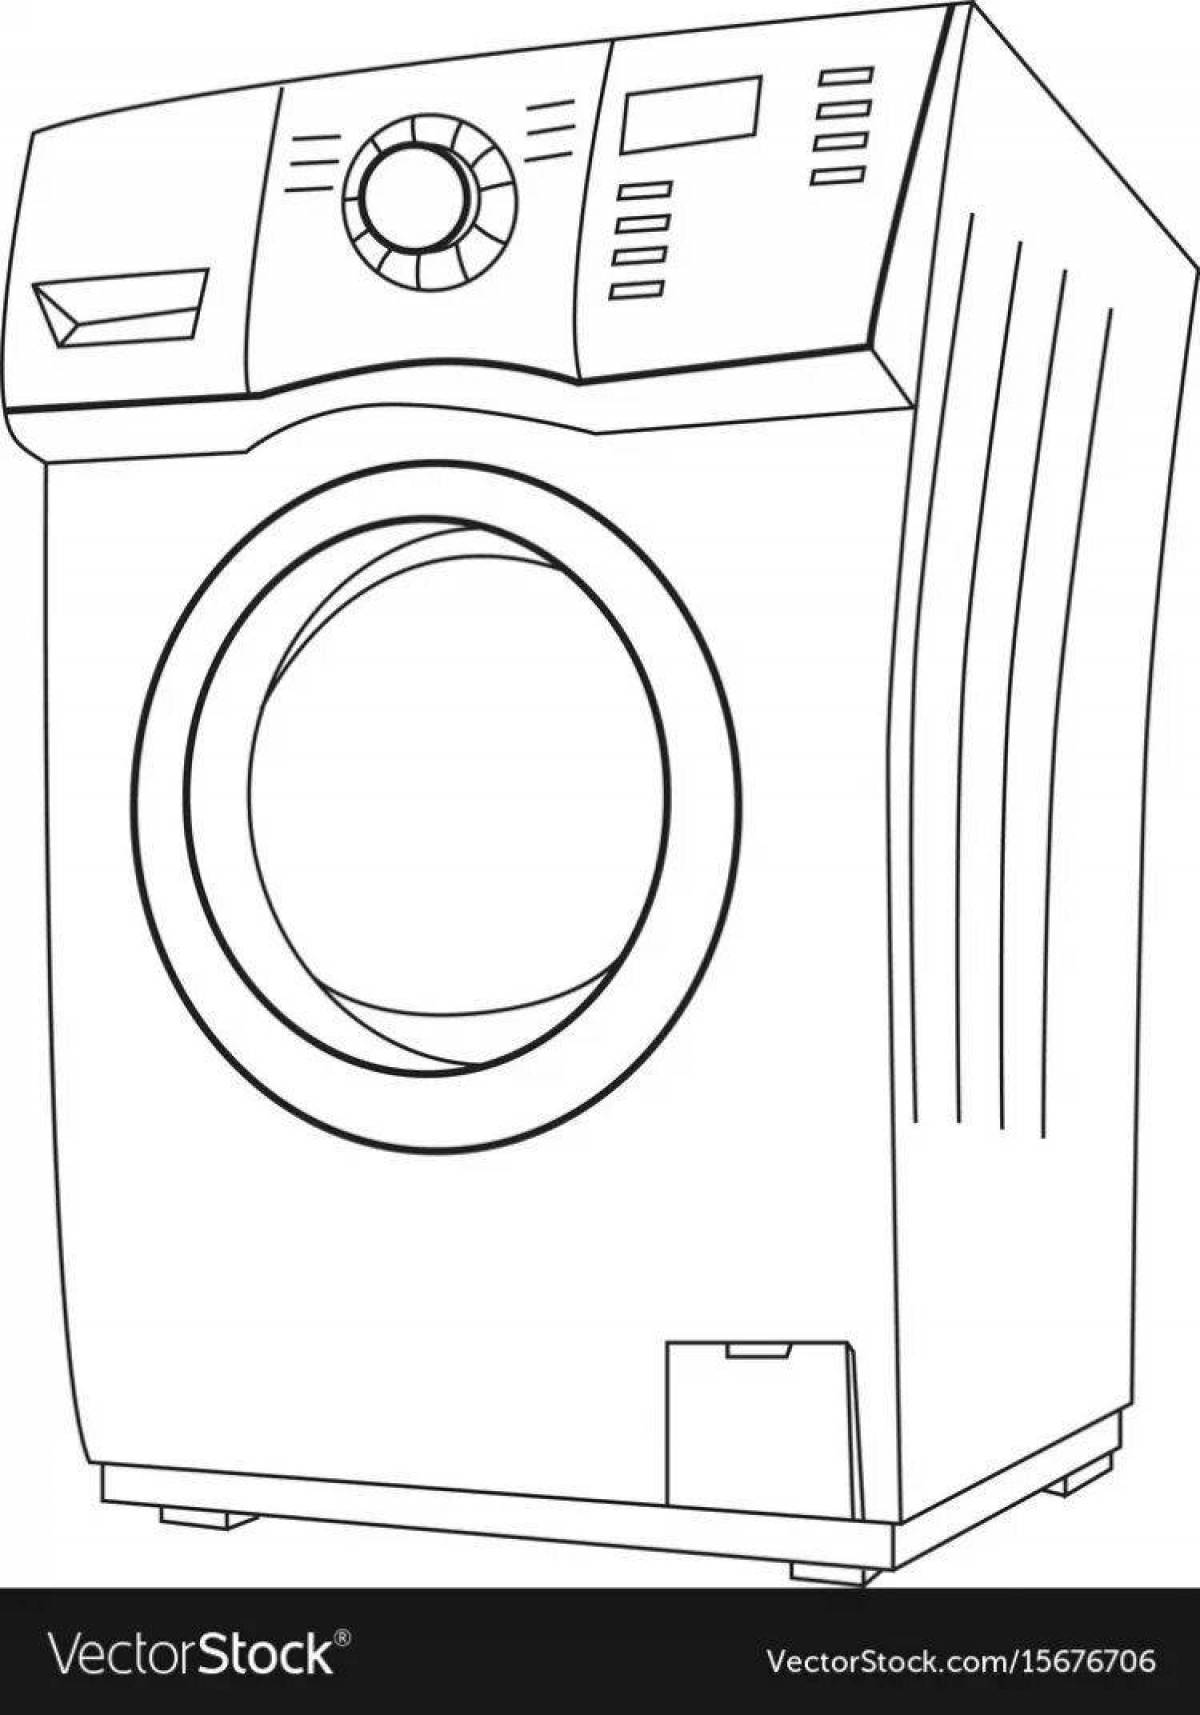 Fun fixies washing machine coloring page